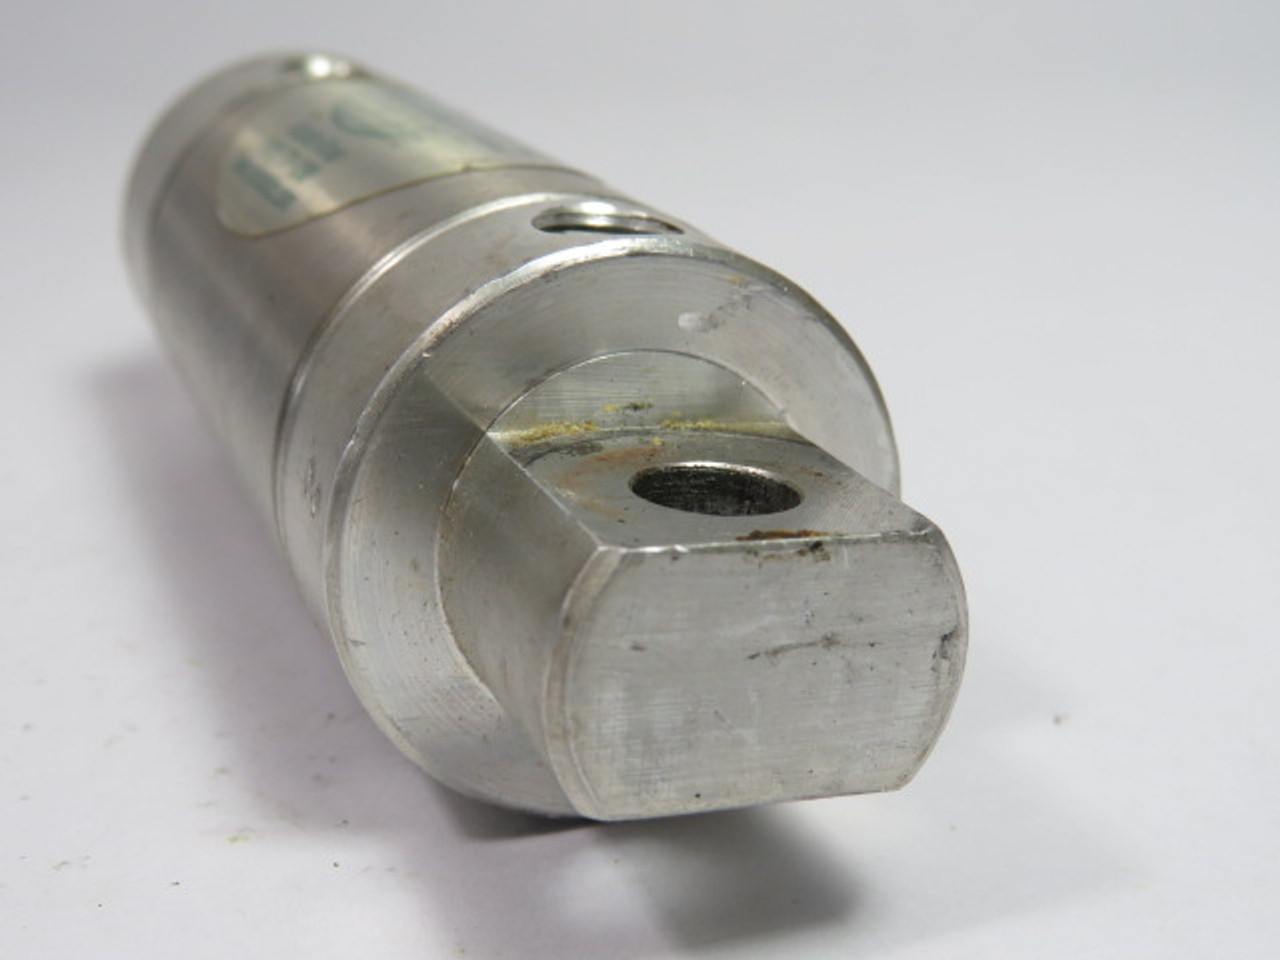 Numatics 1500D02-01I Pneumatic Cylinder 1-1/2" Bore USED